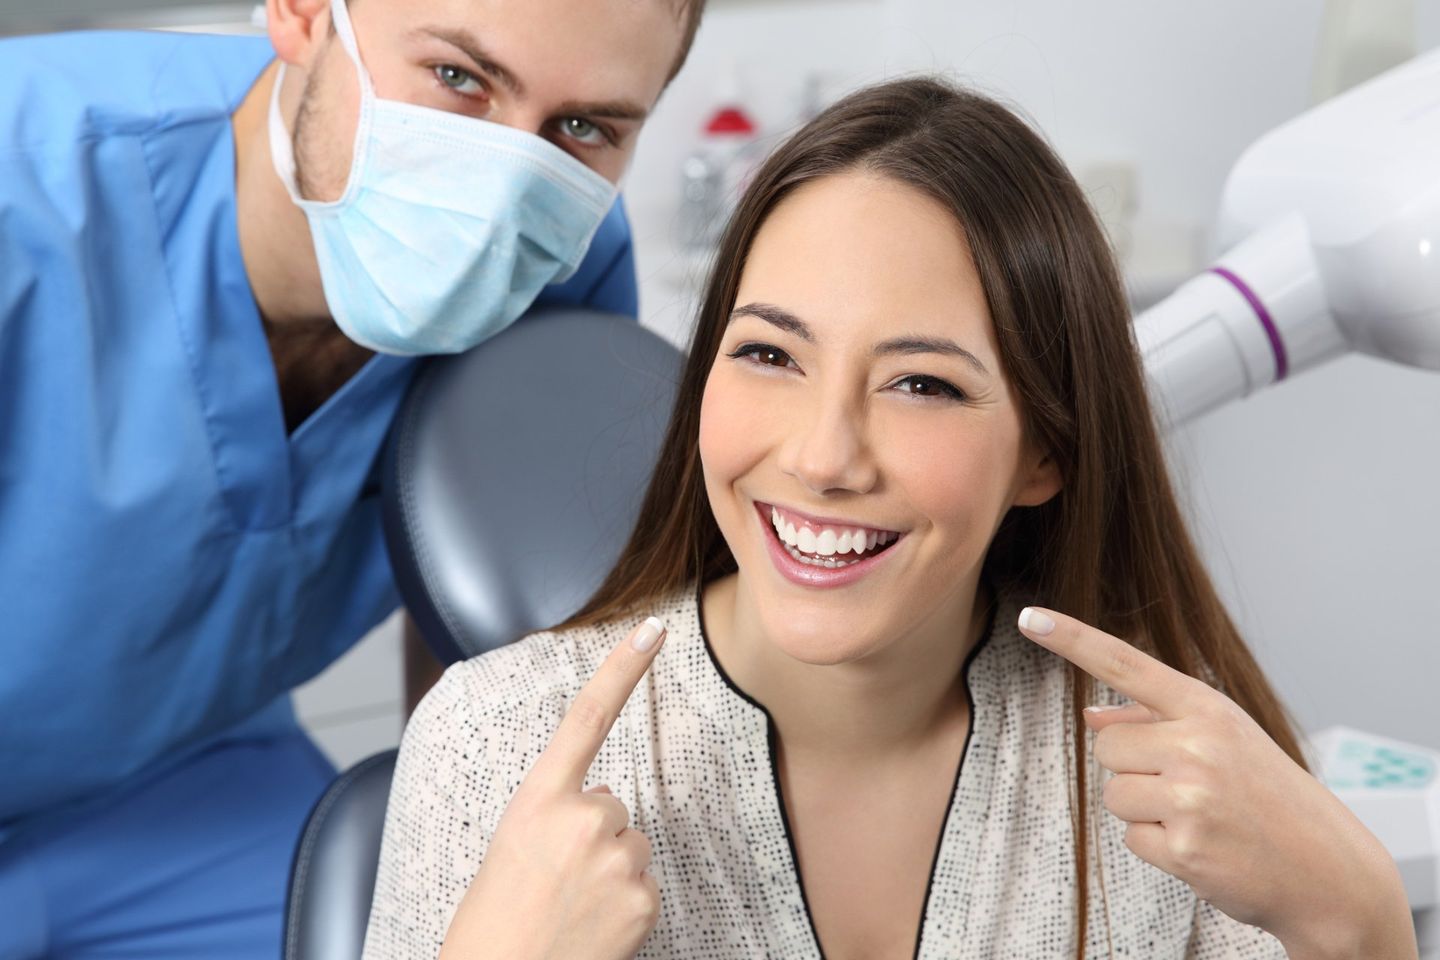 Periodontal Care — White Teeth of Woman in San Bernardino, CA